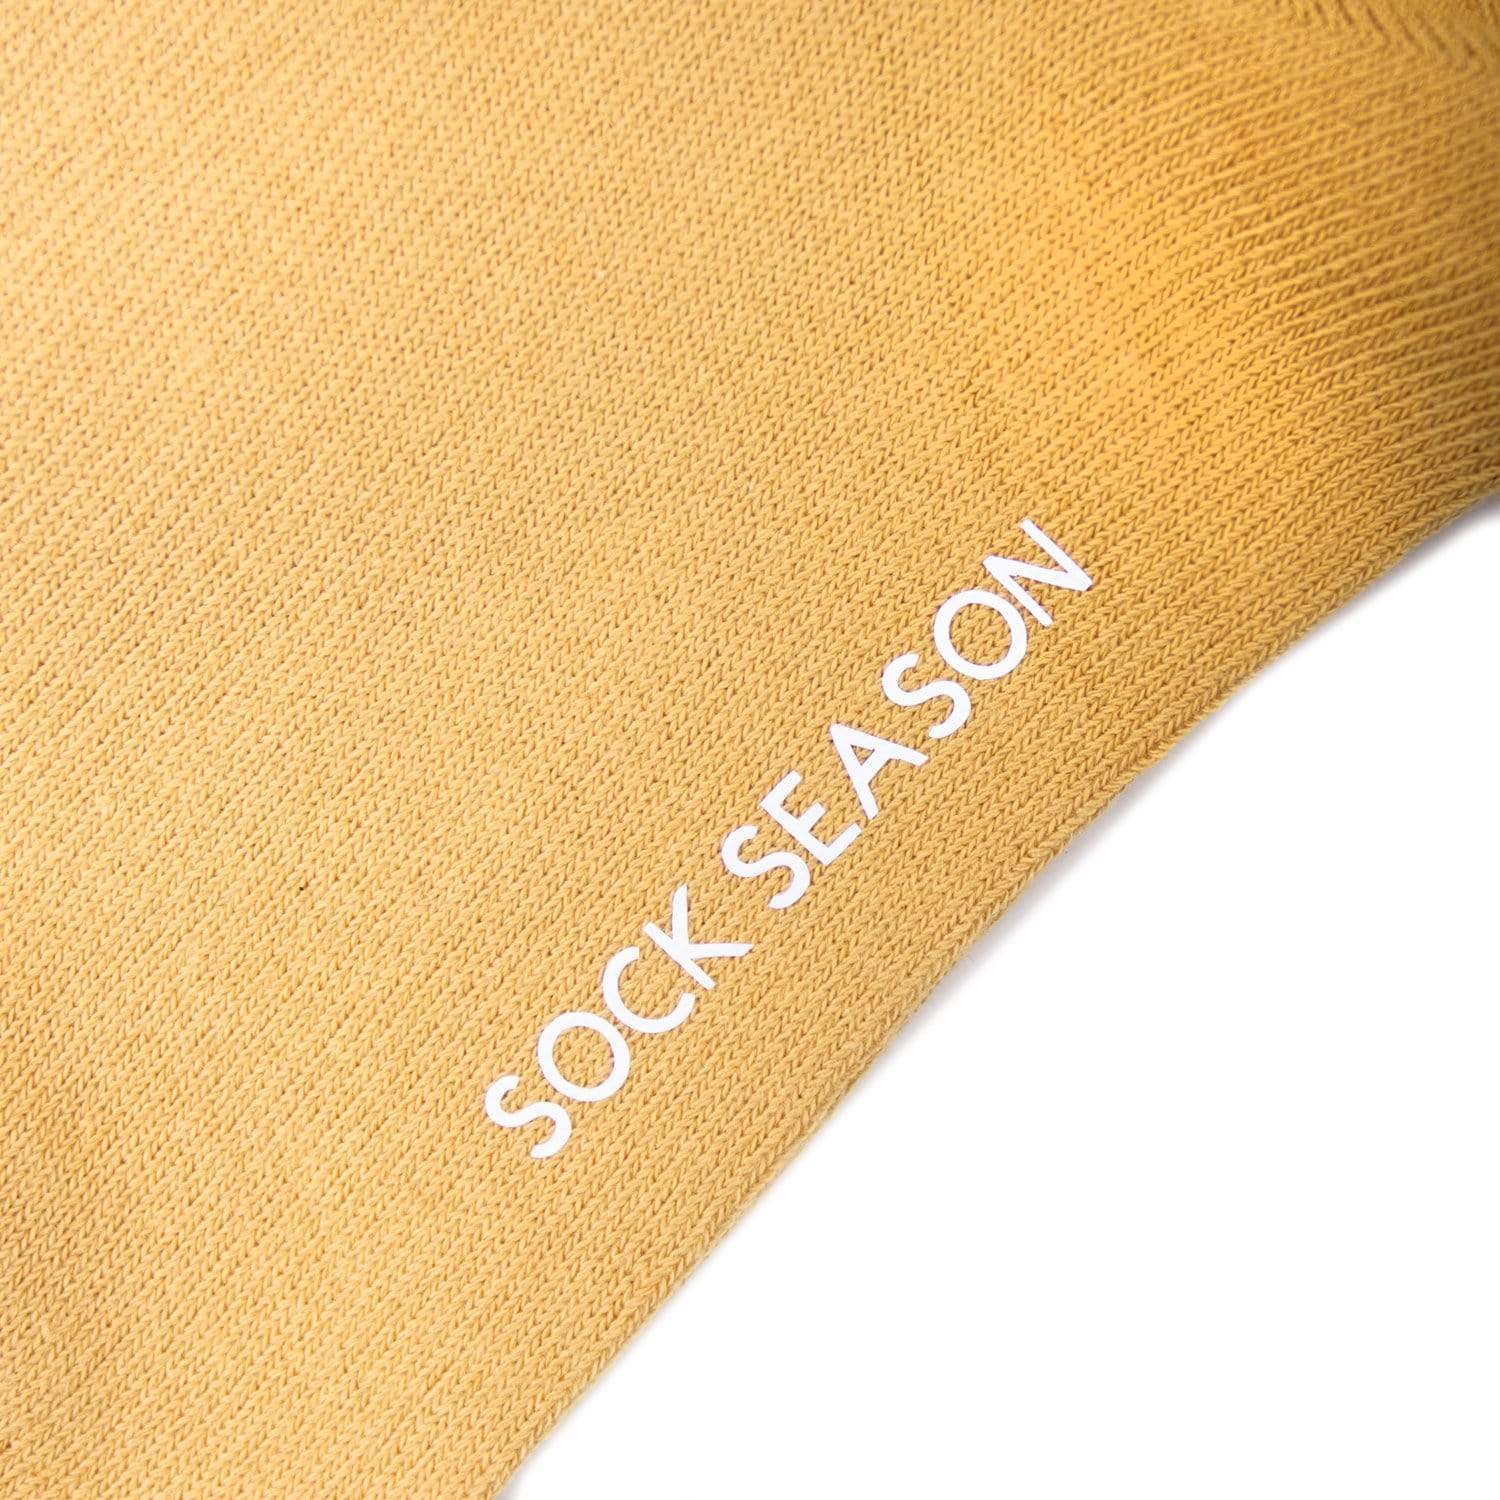 Eva Essential Crew Sock | Yellow - Sock Season